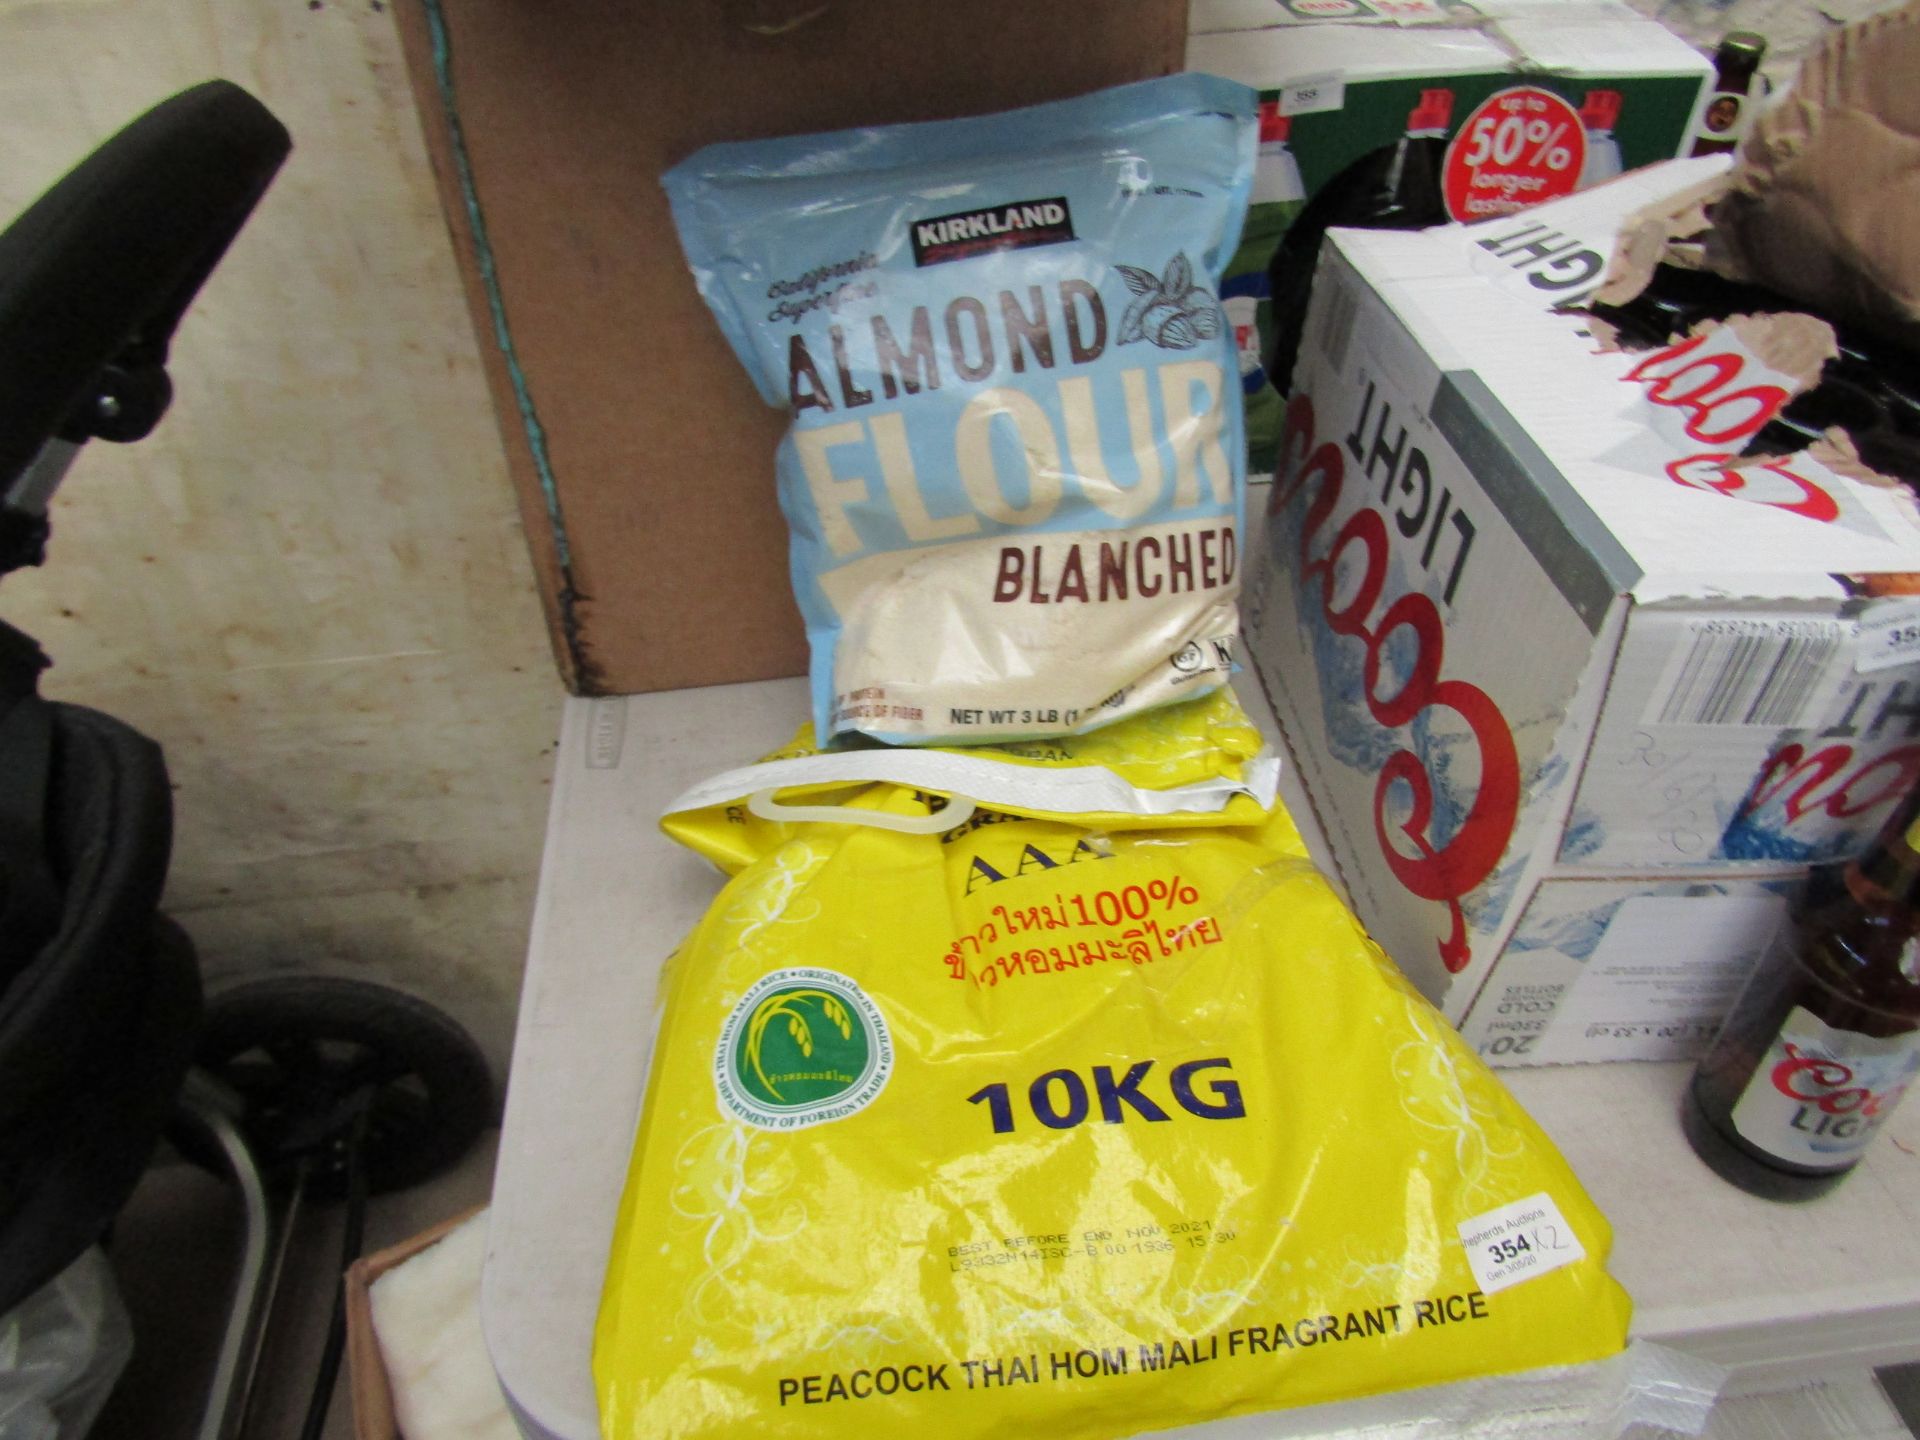 2 Items Being Kirkland Almond Flour (3LB) BB Oct 20 & Approx 6kg of Peacock Thai Hom Mali Fragrant